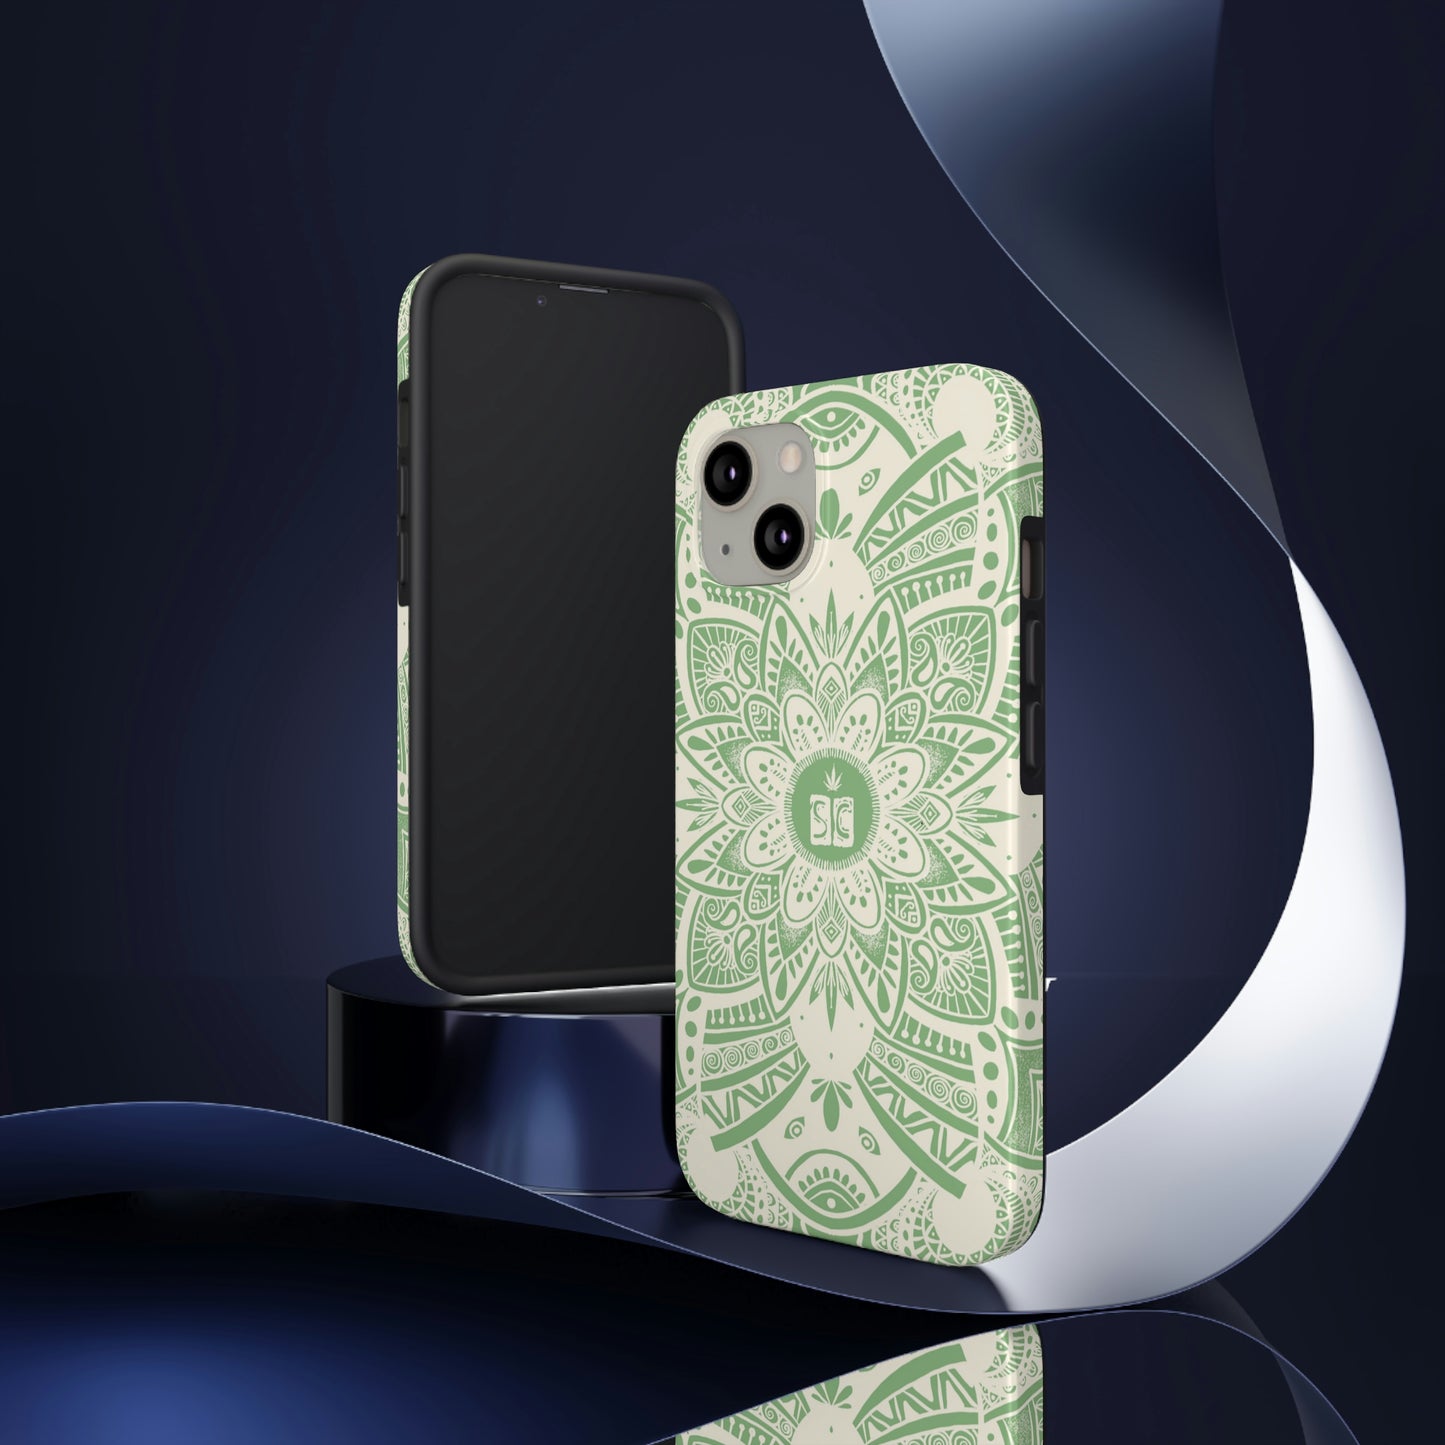 Shmackedala Phone Case - Sage Green & White